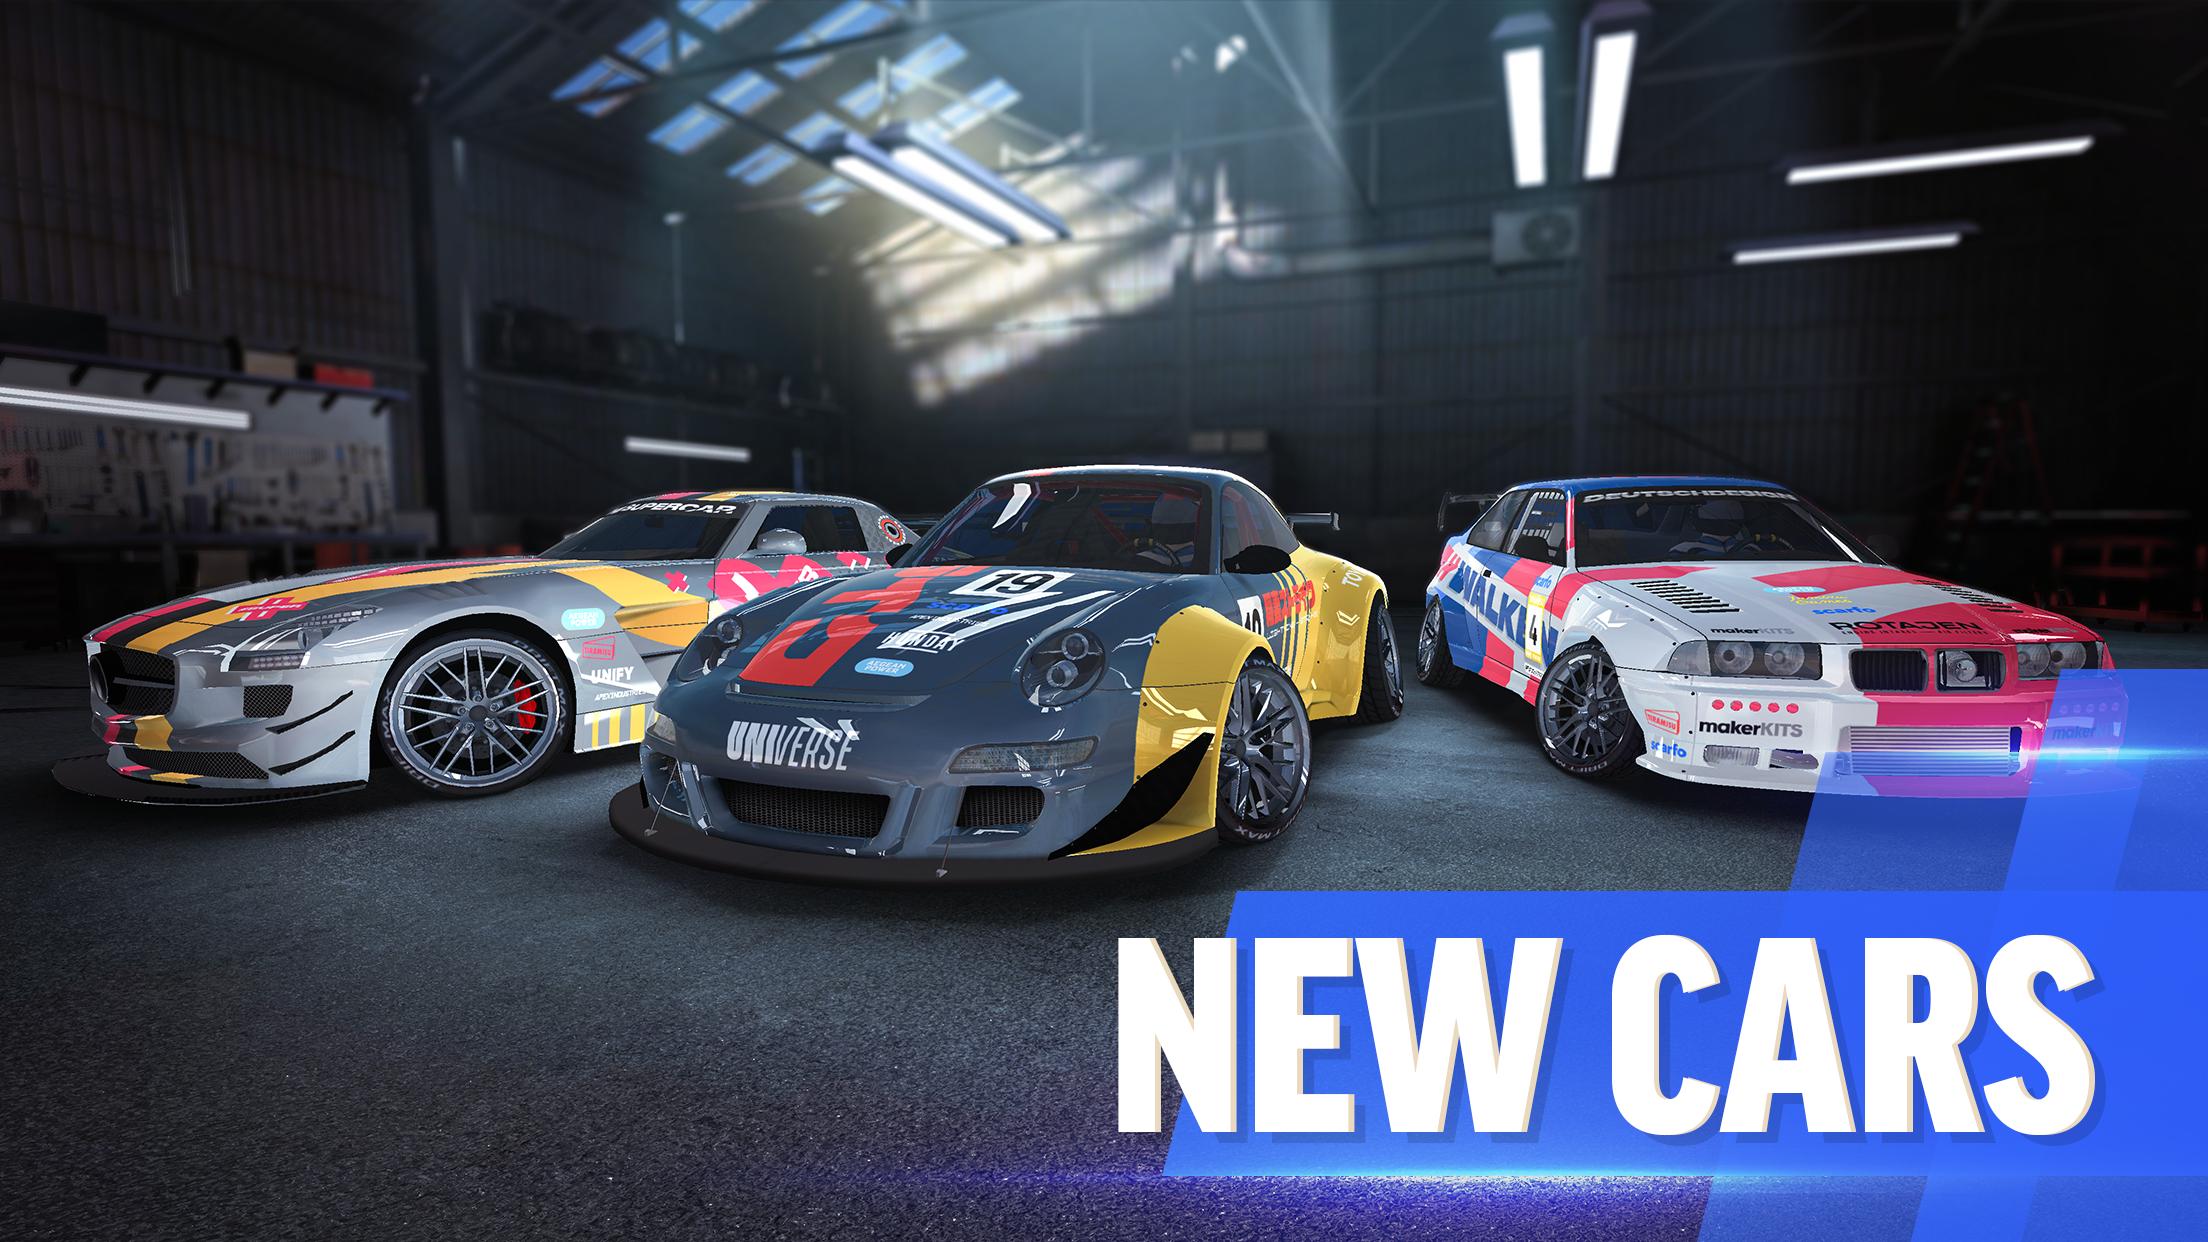 Drift Max Pro Car Drifting Game with Racing Cars 2.4.60 Screenshot 1